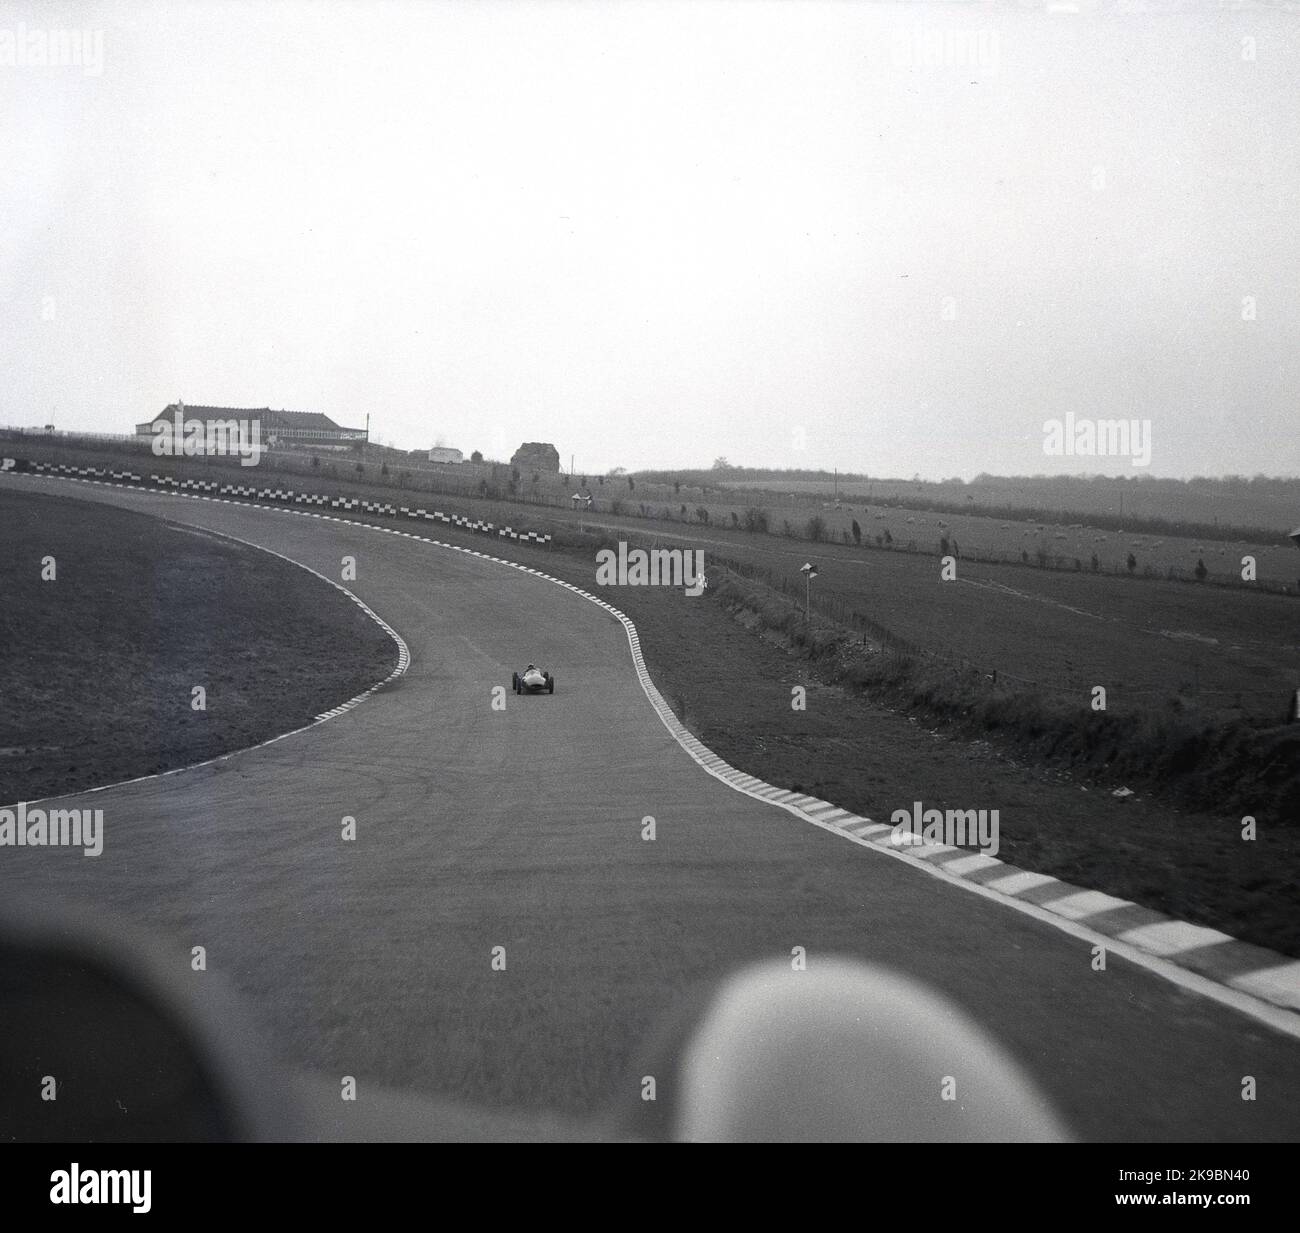 1959, historical, Cooper's Racing School, Brands Hatch, Kent, England, UK, racing car on circuit, coming down straight Stock Photo